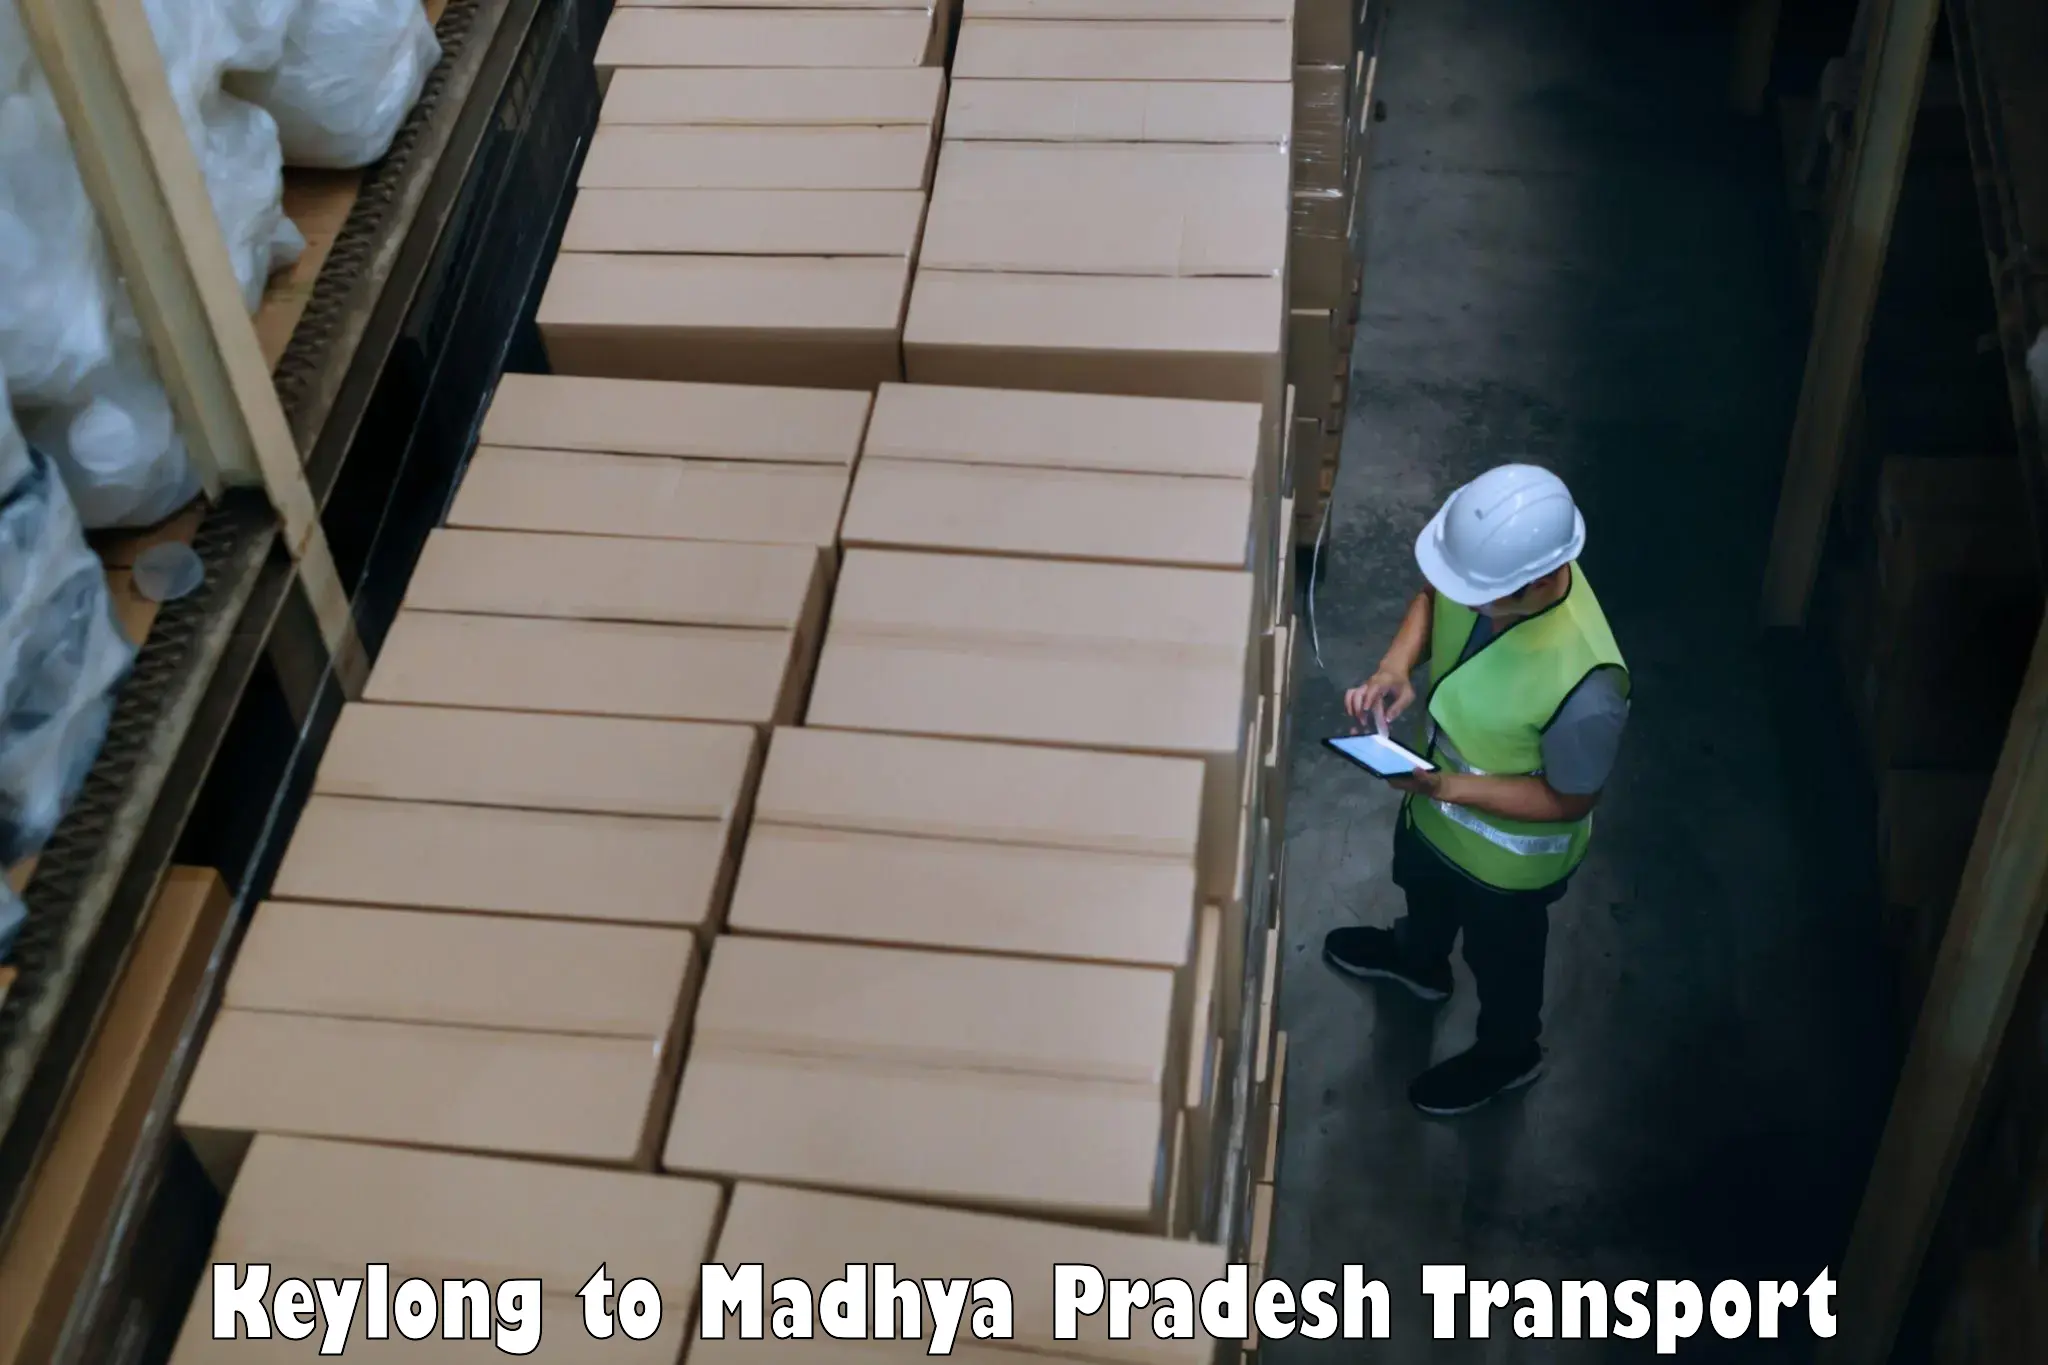 Cargo train transport services in Keylong to Chhatarpur